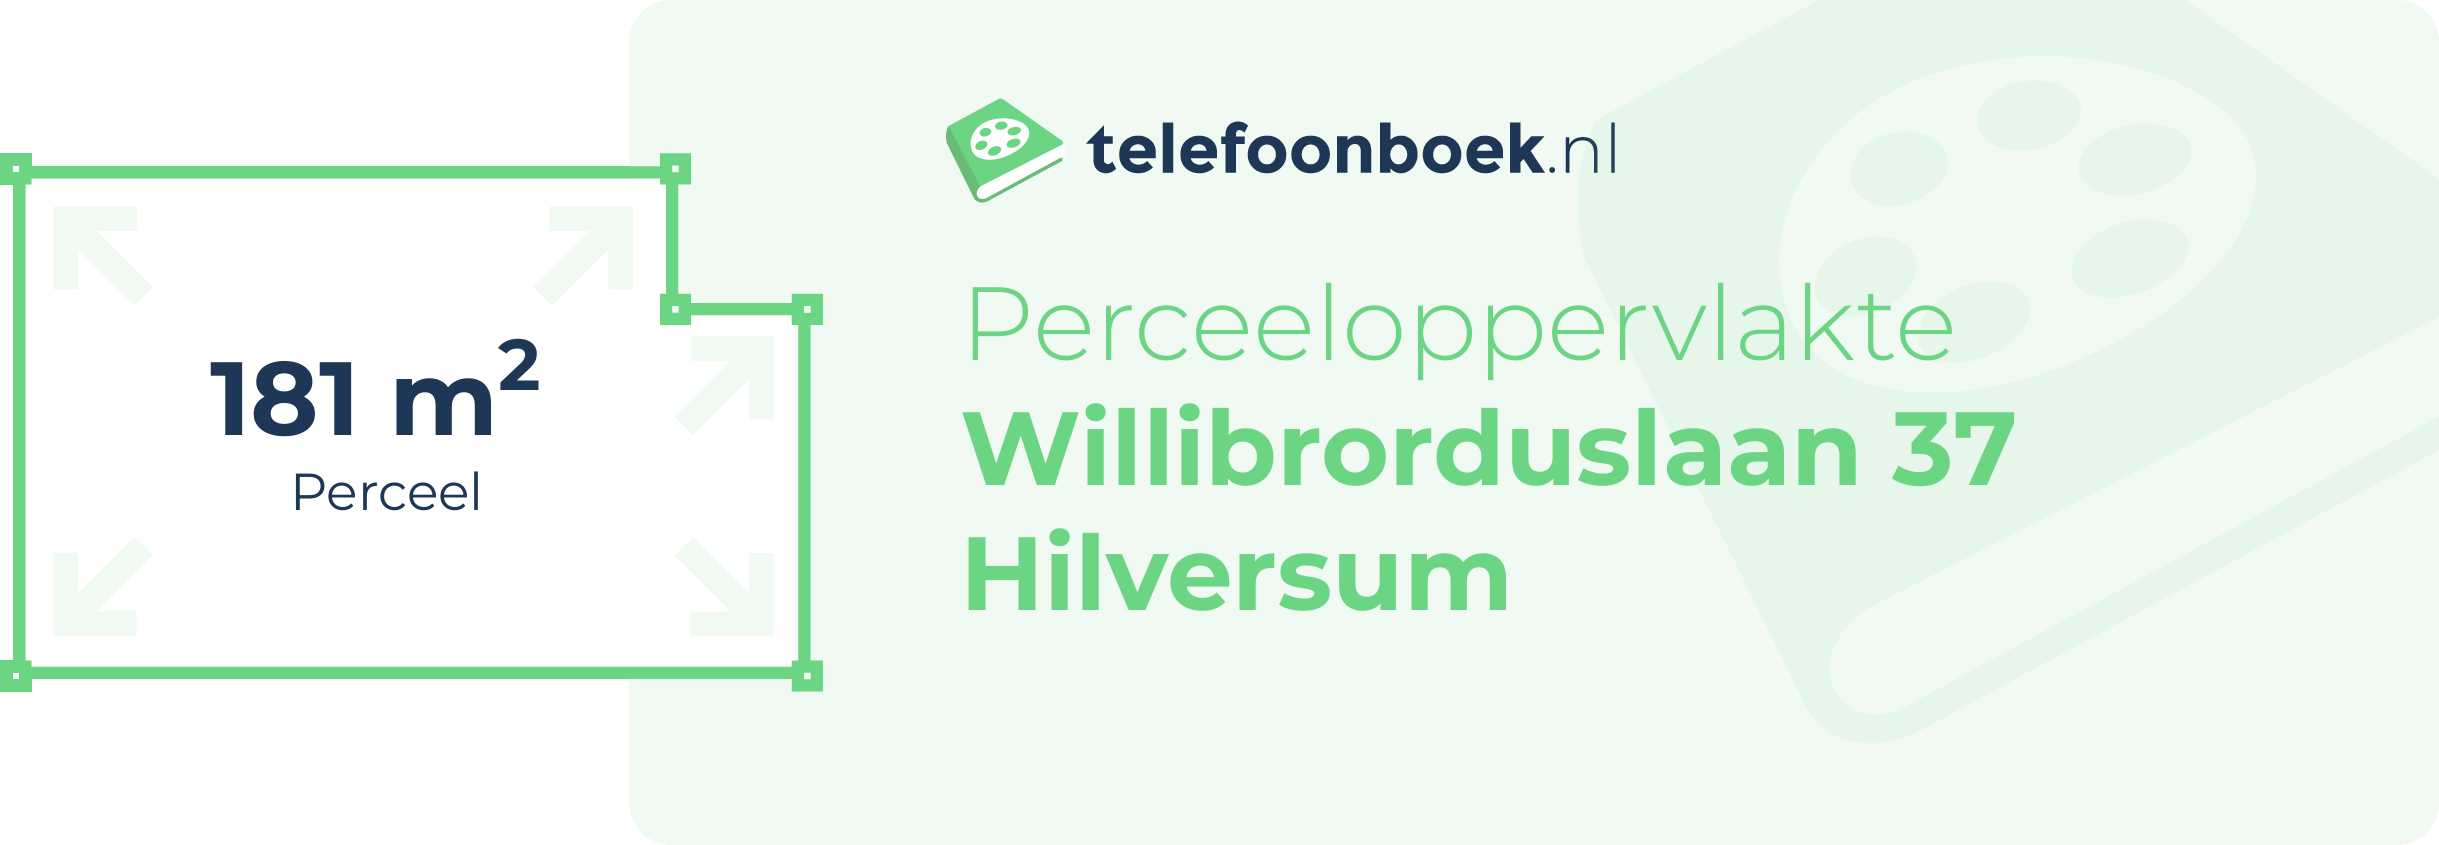 Perceeloppervlakte Willibrorduslaan 37 Hilversum